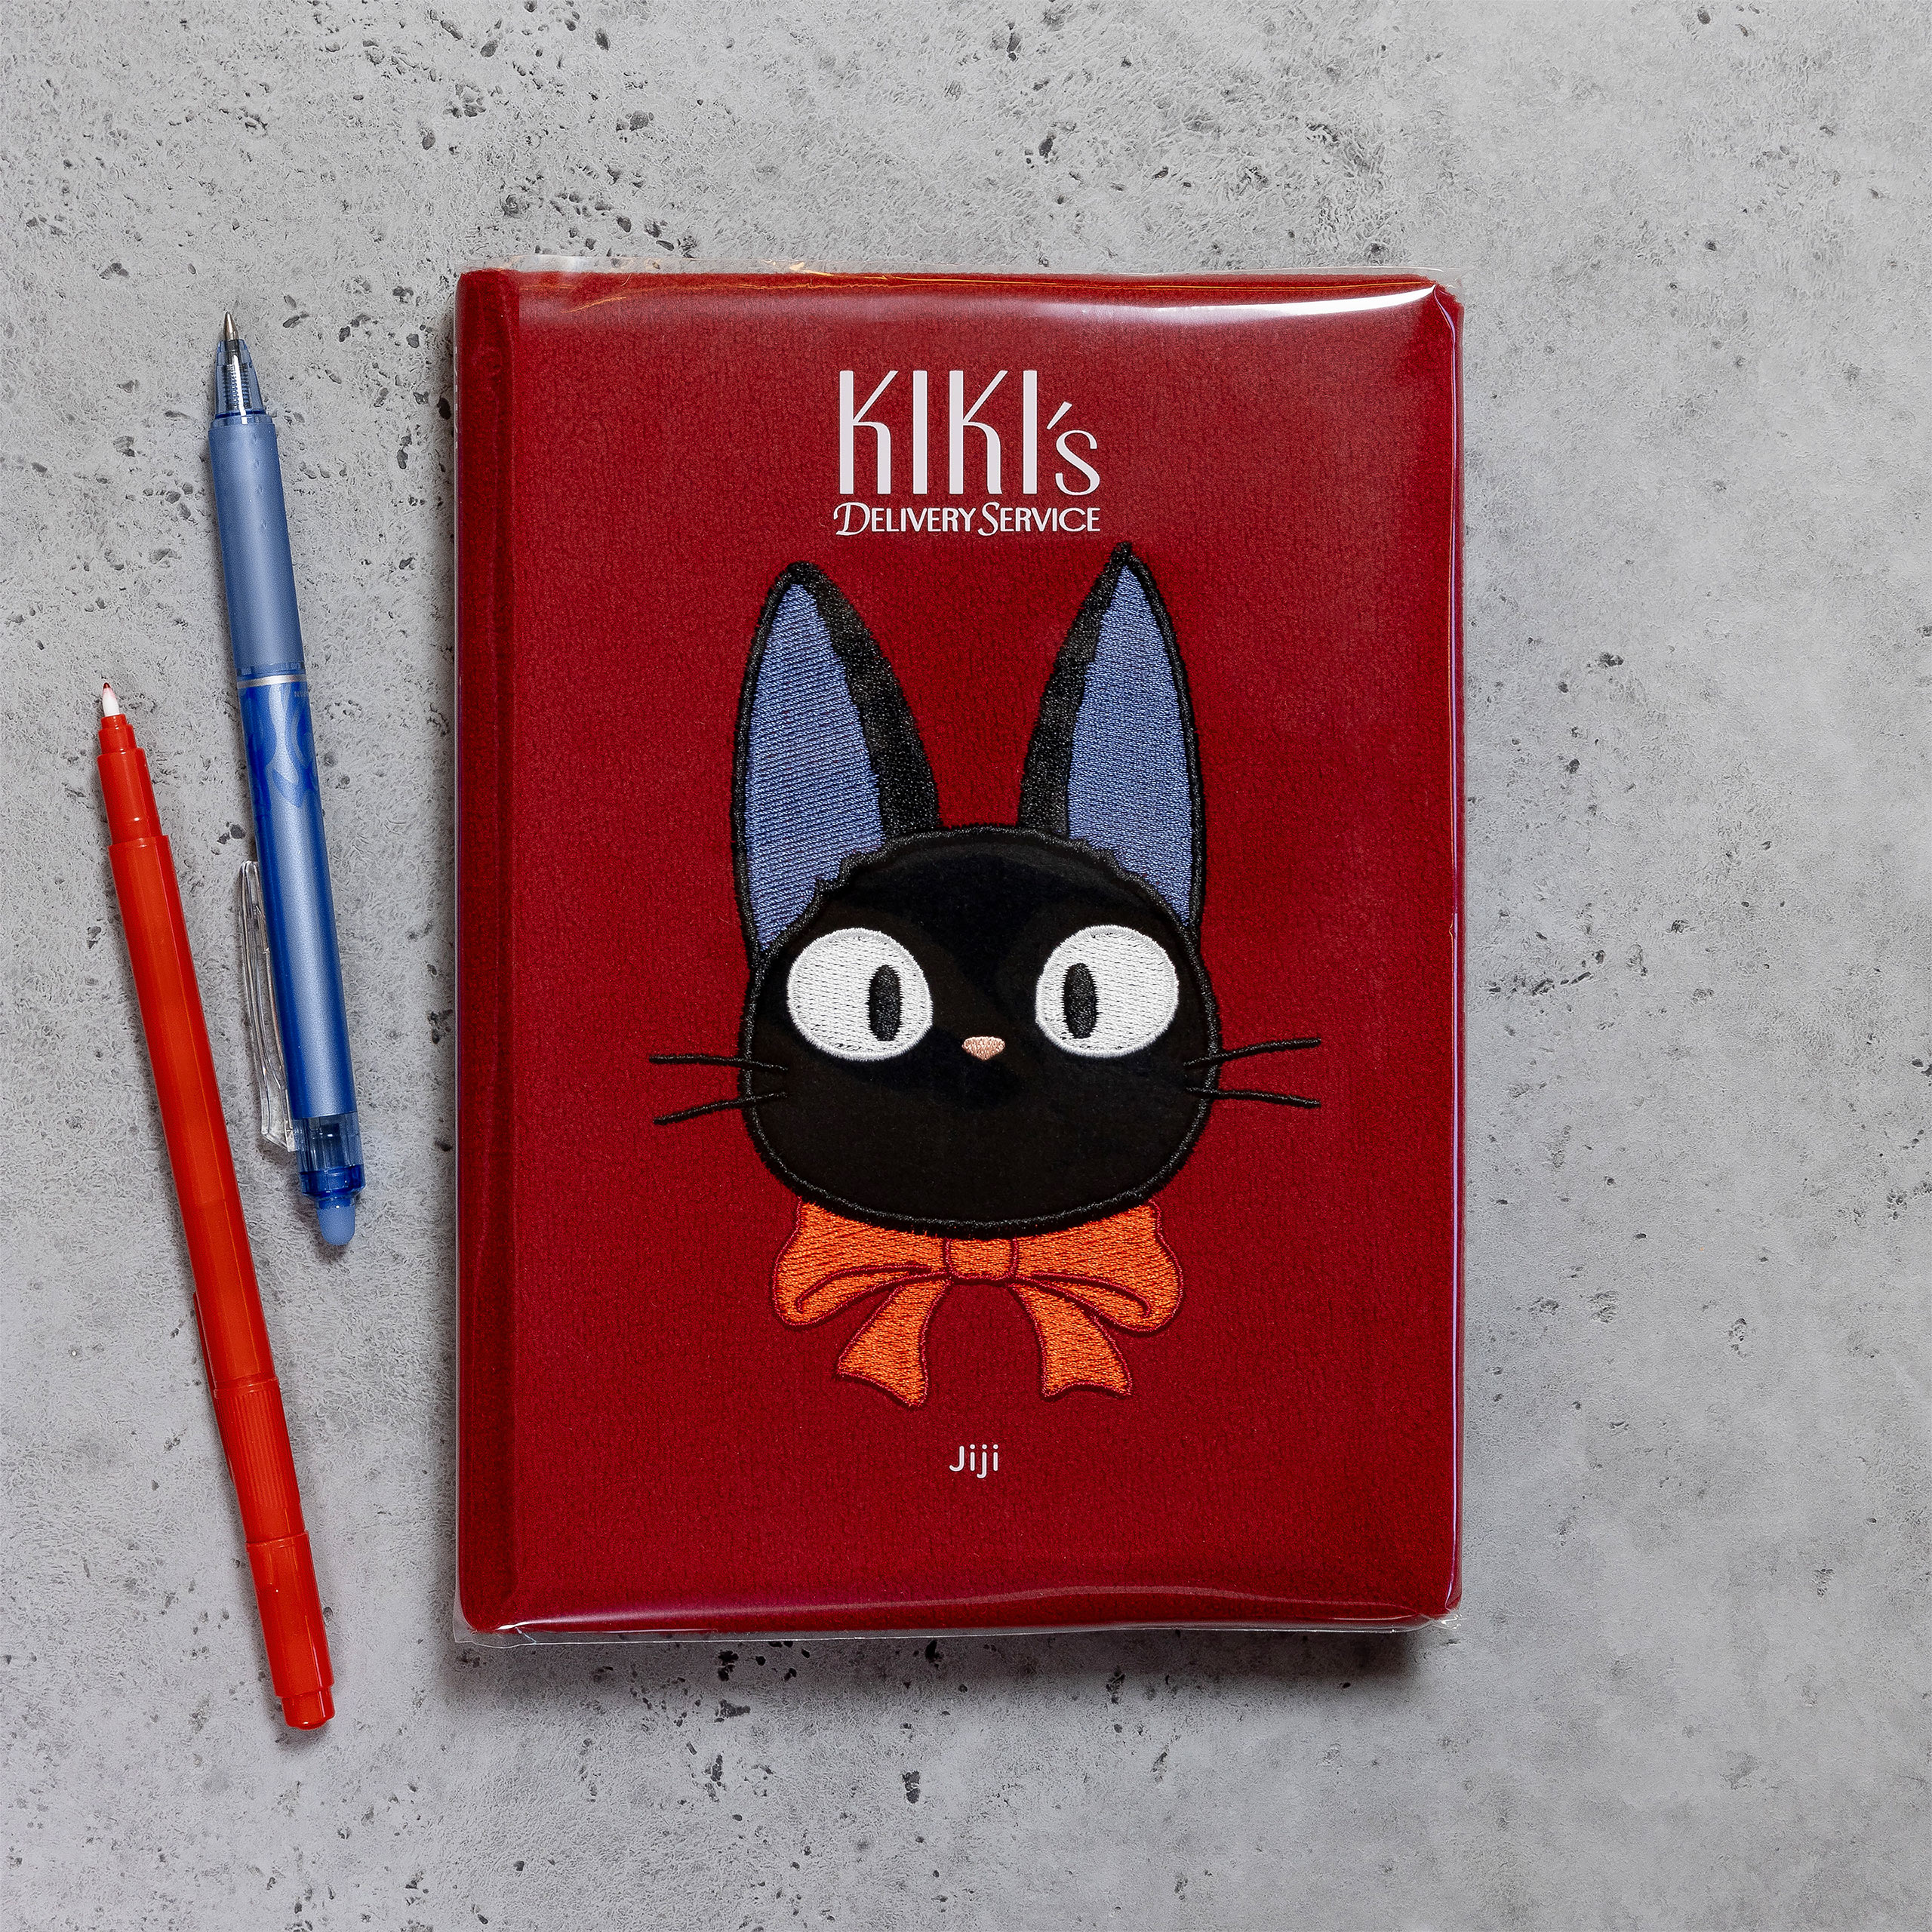 Kiki's Kleine Bezorgservice - Jiji Pluche Notitieboek A5